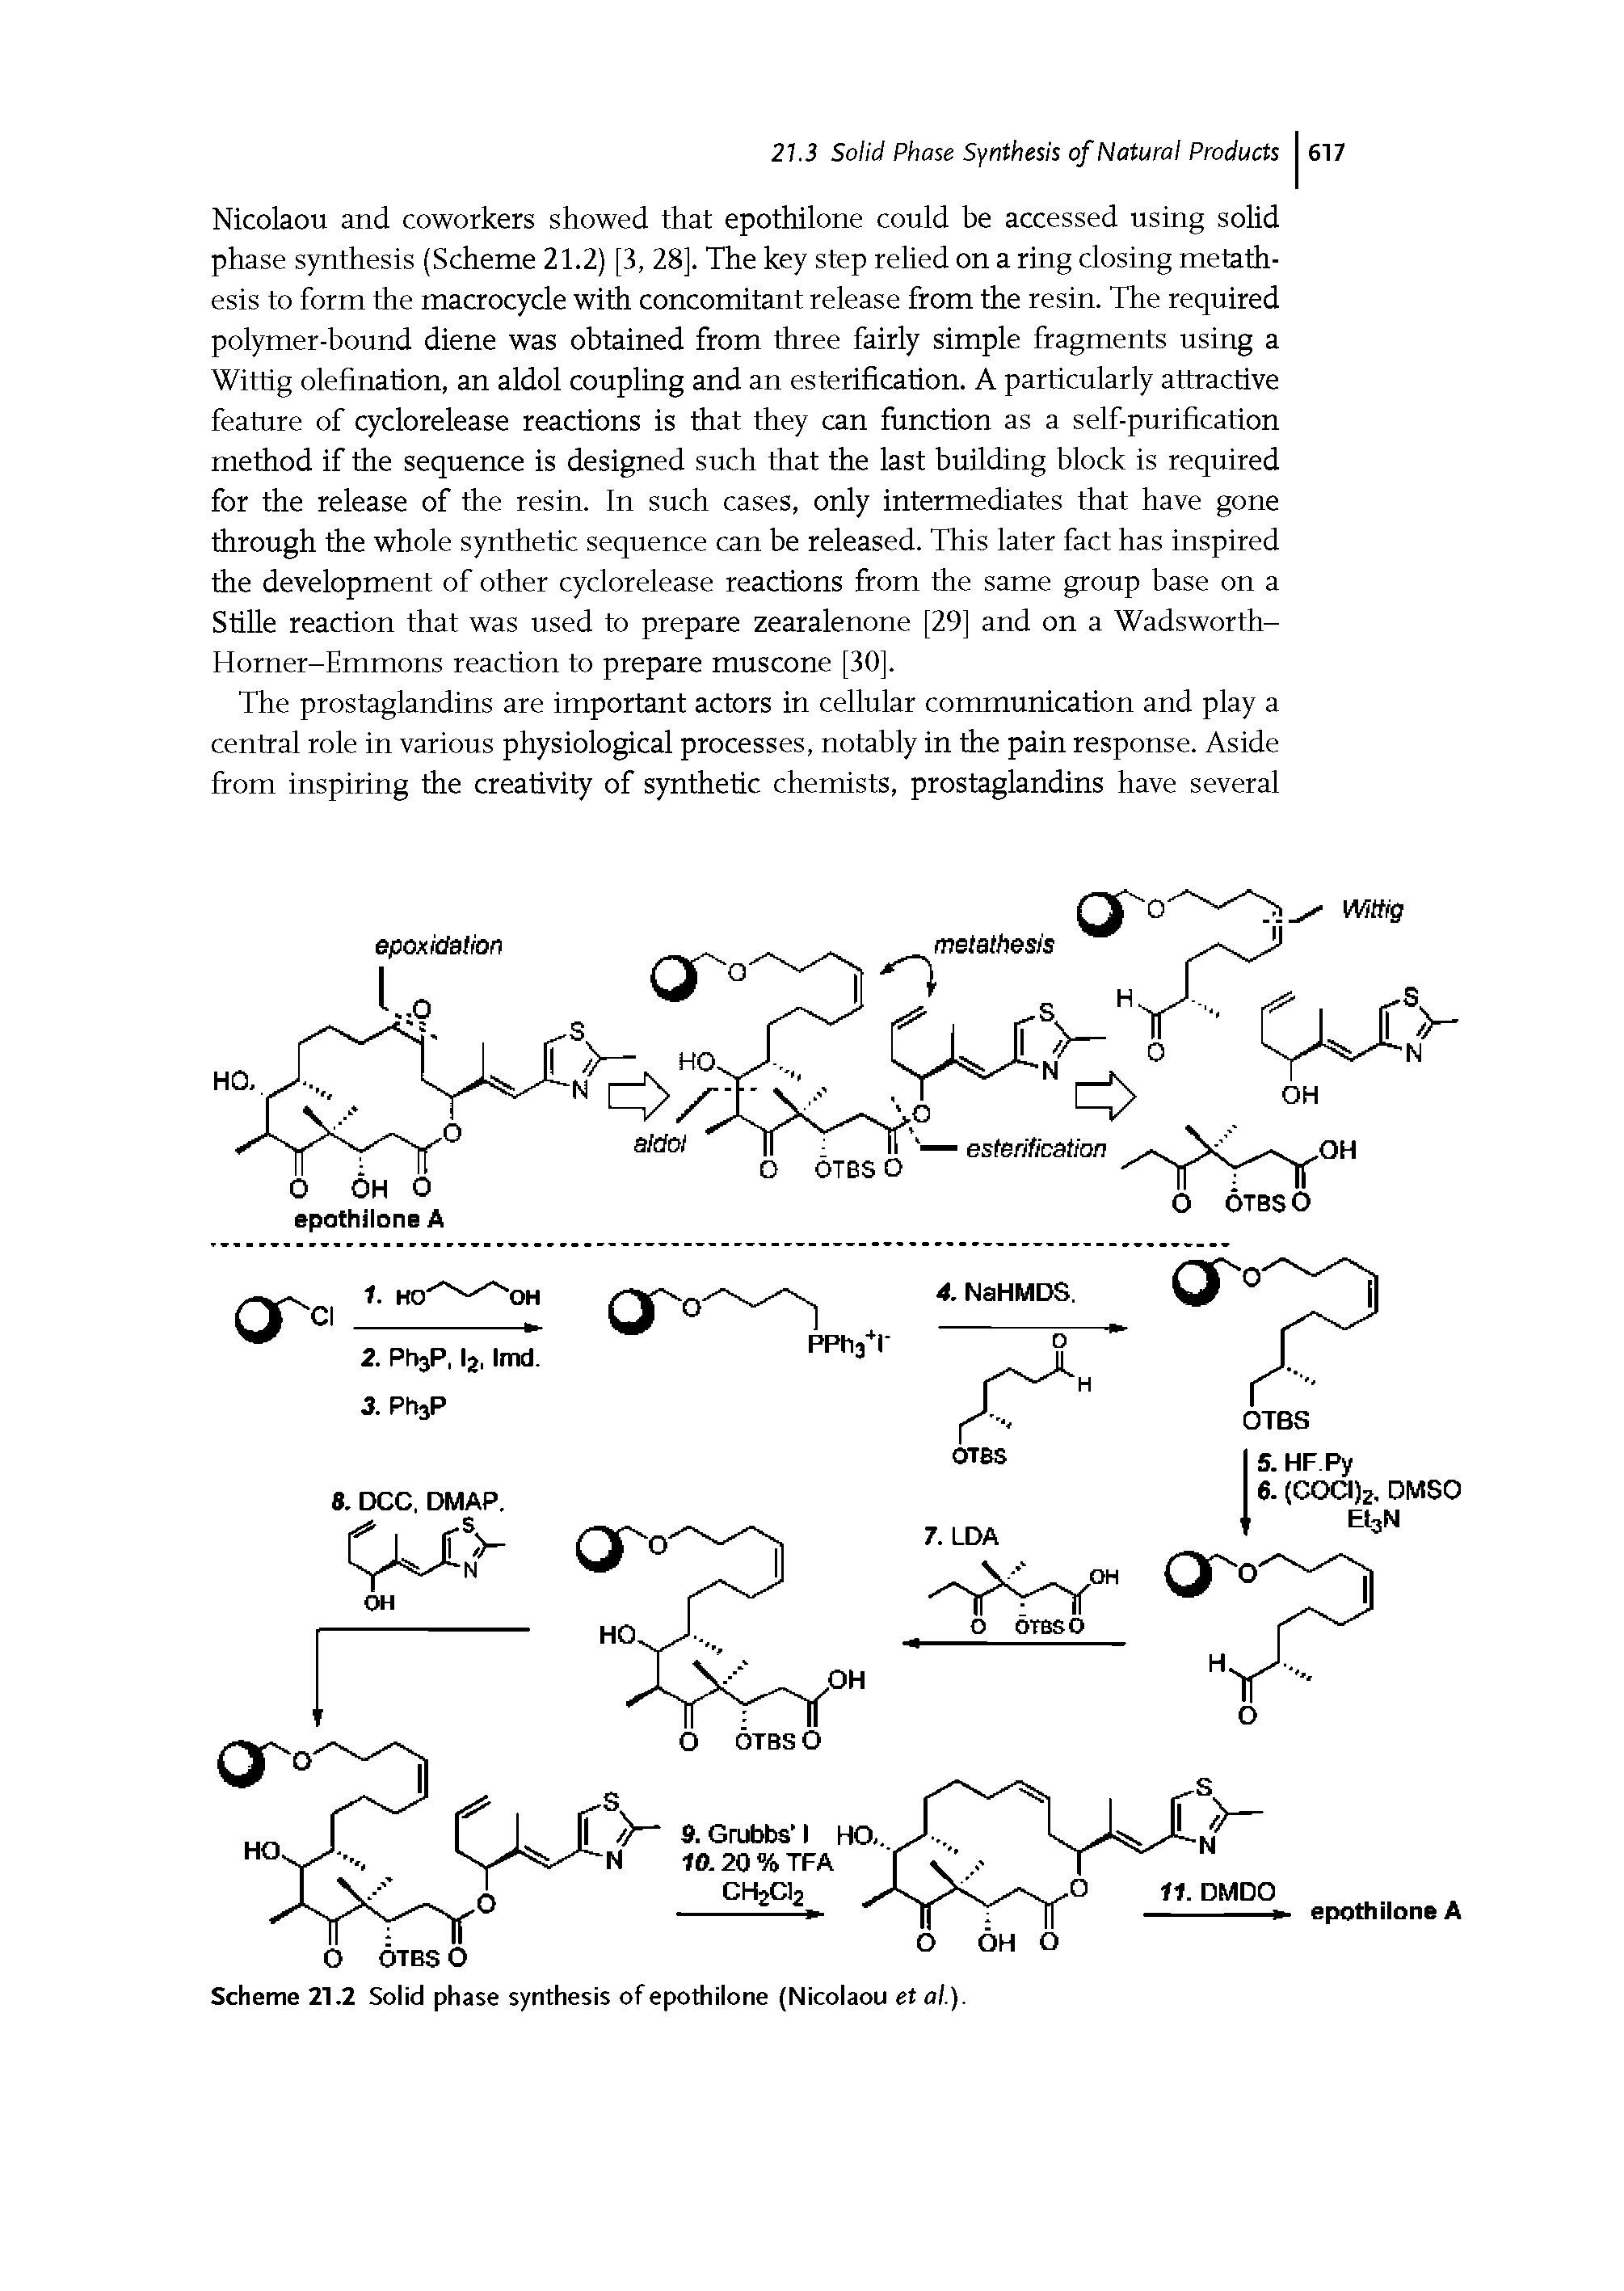 Scheme 21.2 Solid phase synthesis of epothilone (Nicolaou etal.).